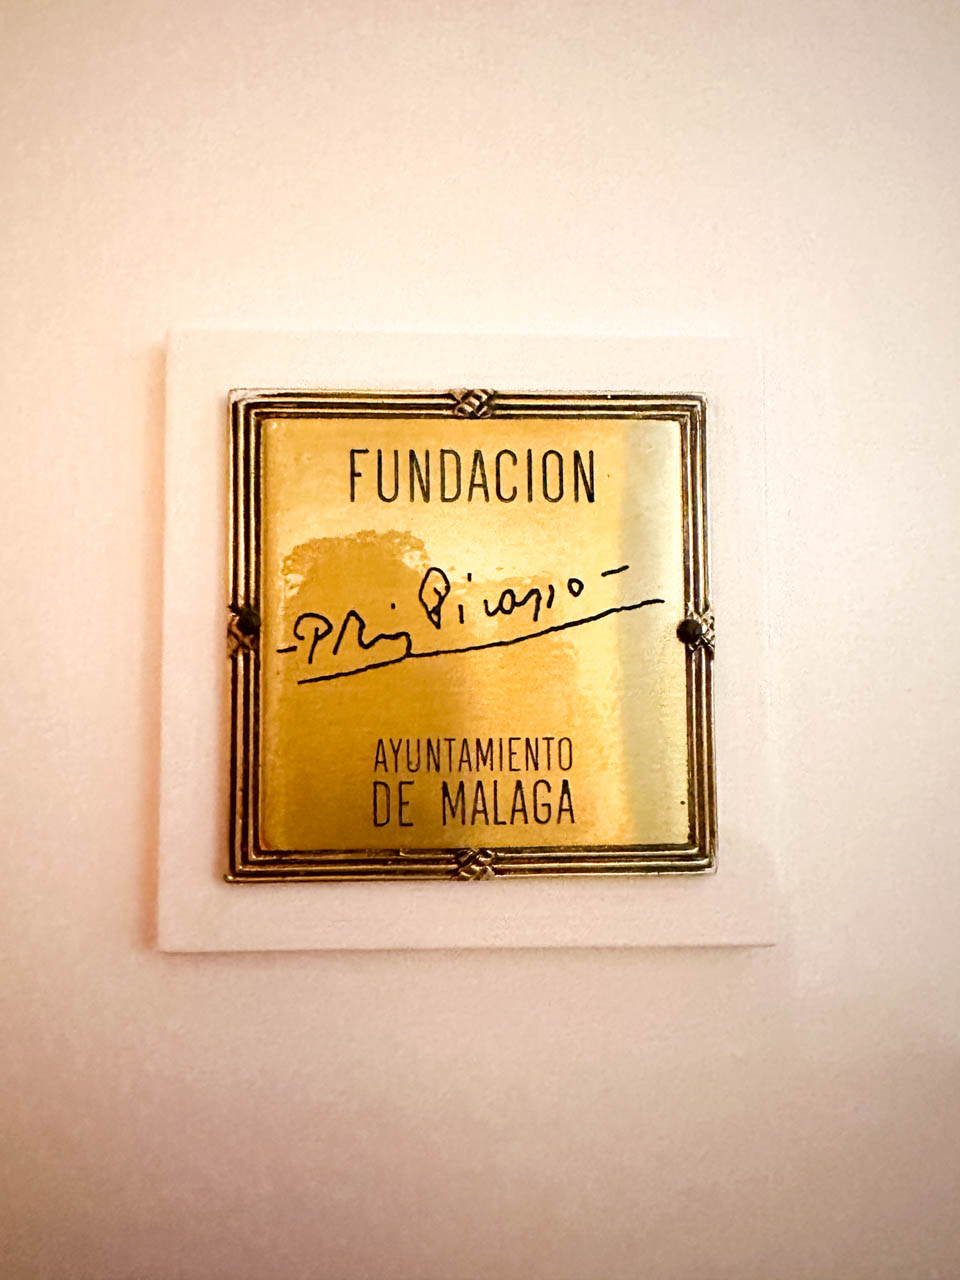 A close-up of a golden plaque inscribed with 'Fundación Picasso' and 'Ayuntamiento de Malaga', signed by Picasso